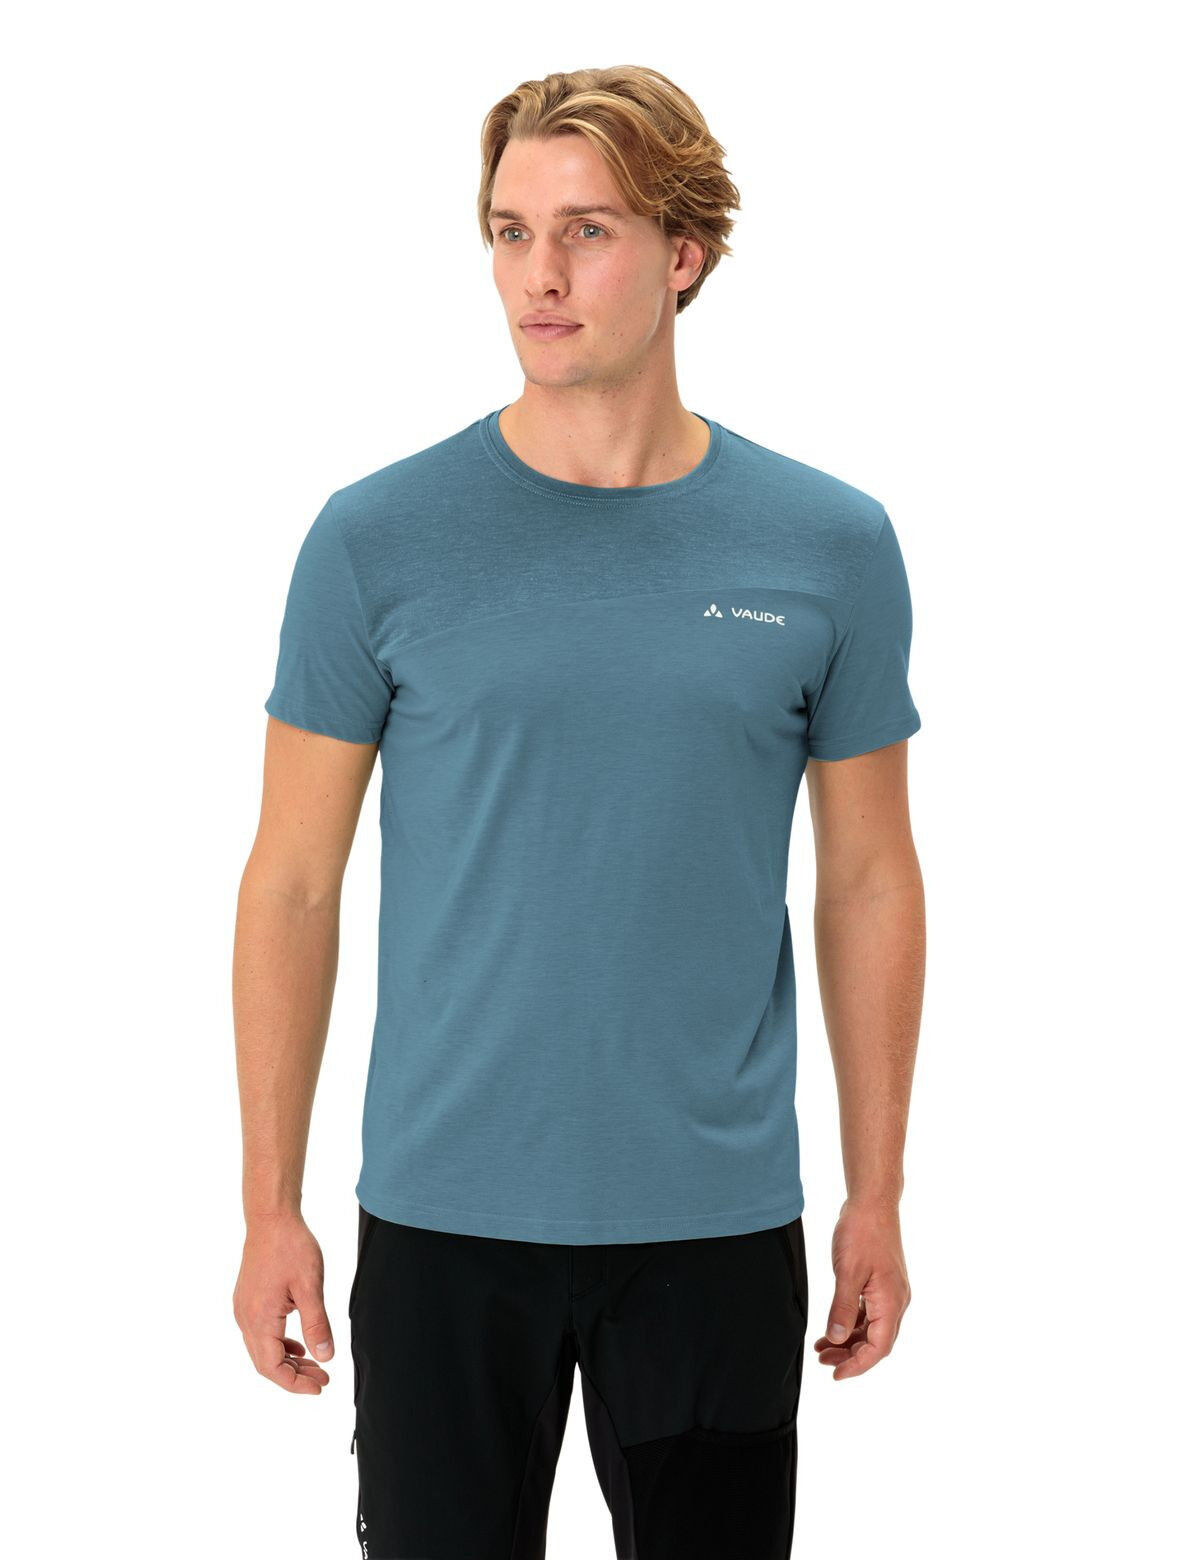 Vaude - Sveit T-Shirt - Camiseta - Hombre